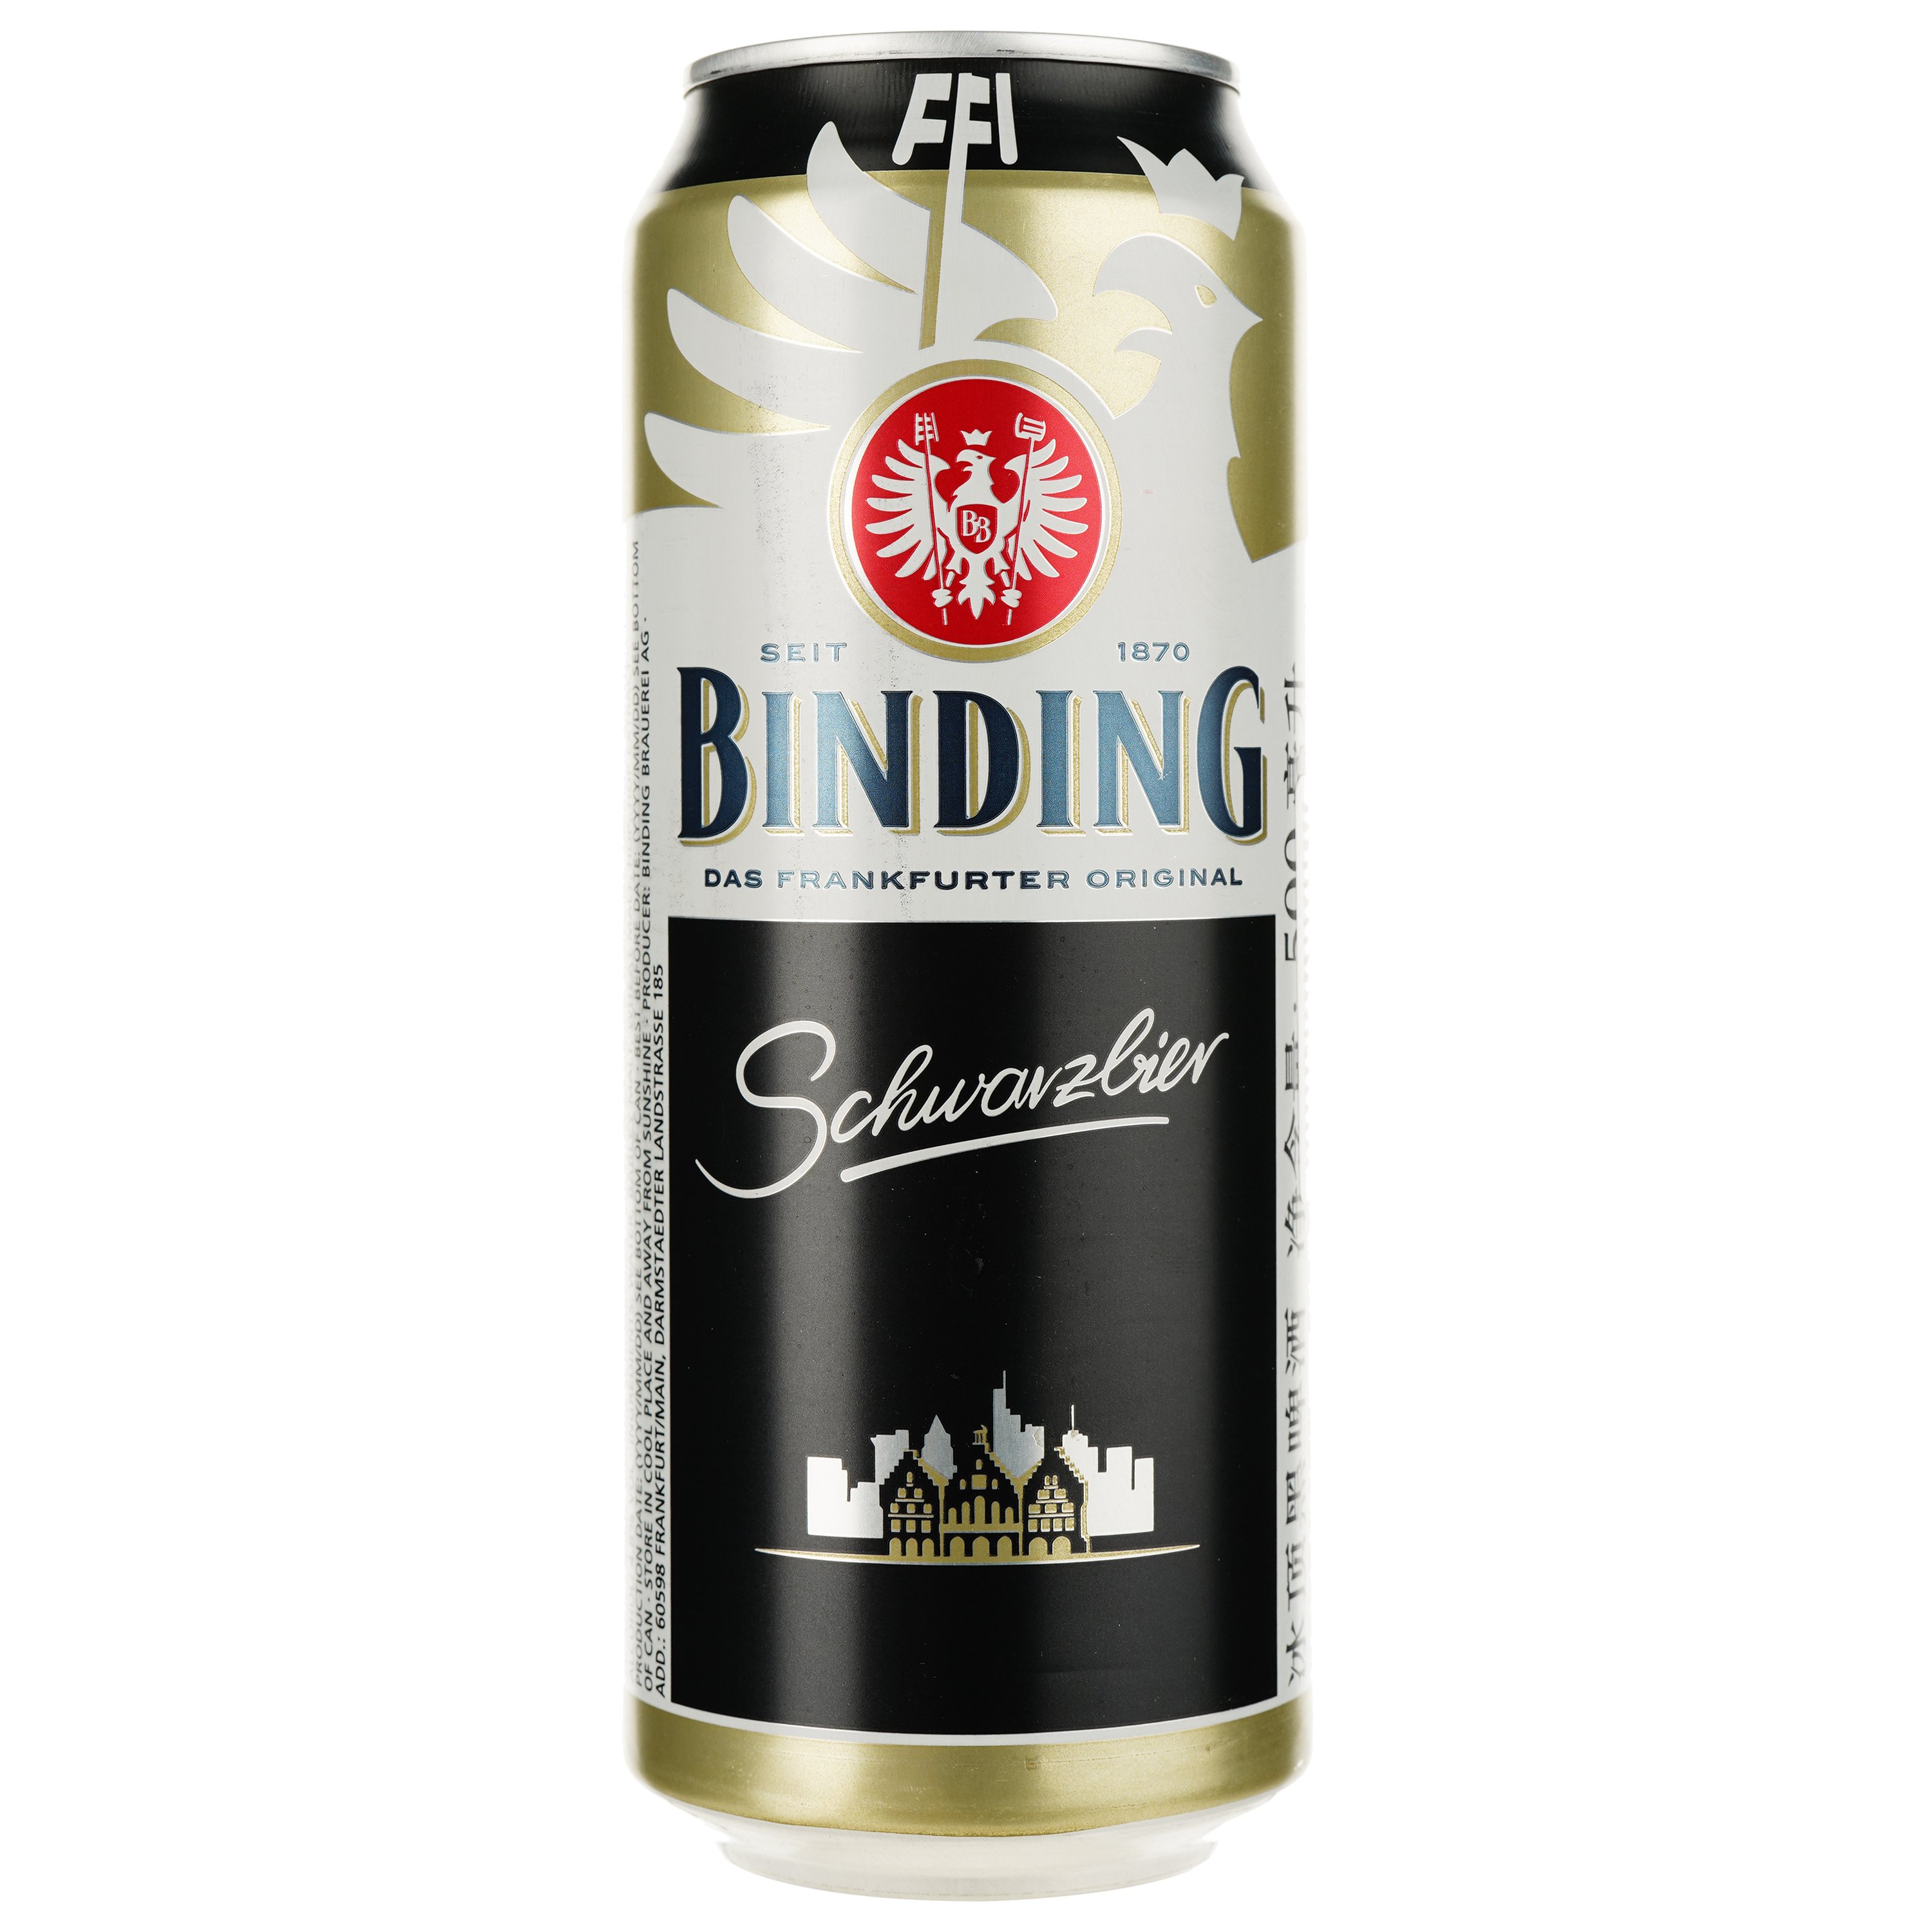 Пиво Binding Schwarzbier темное 4.8% 0.5 л ж/б - фото 1